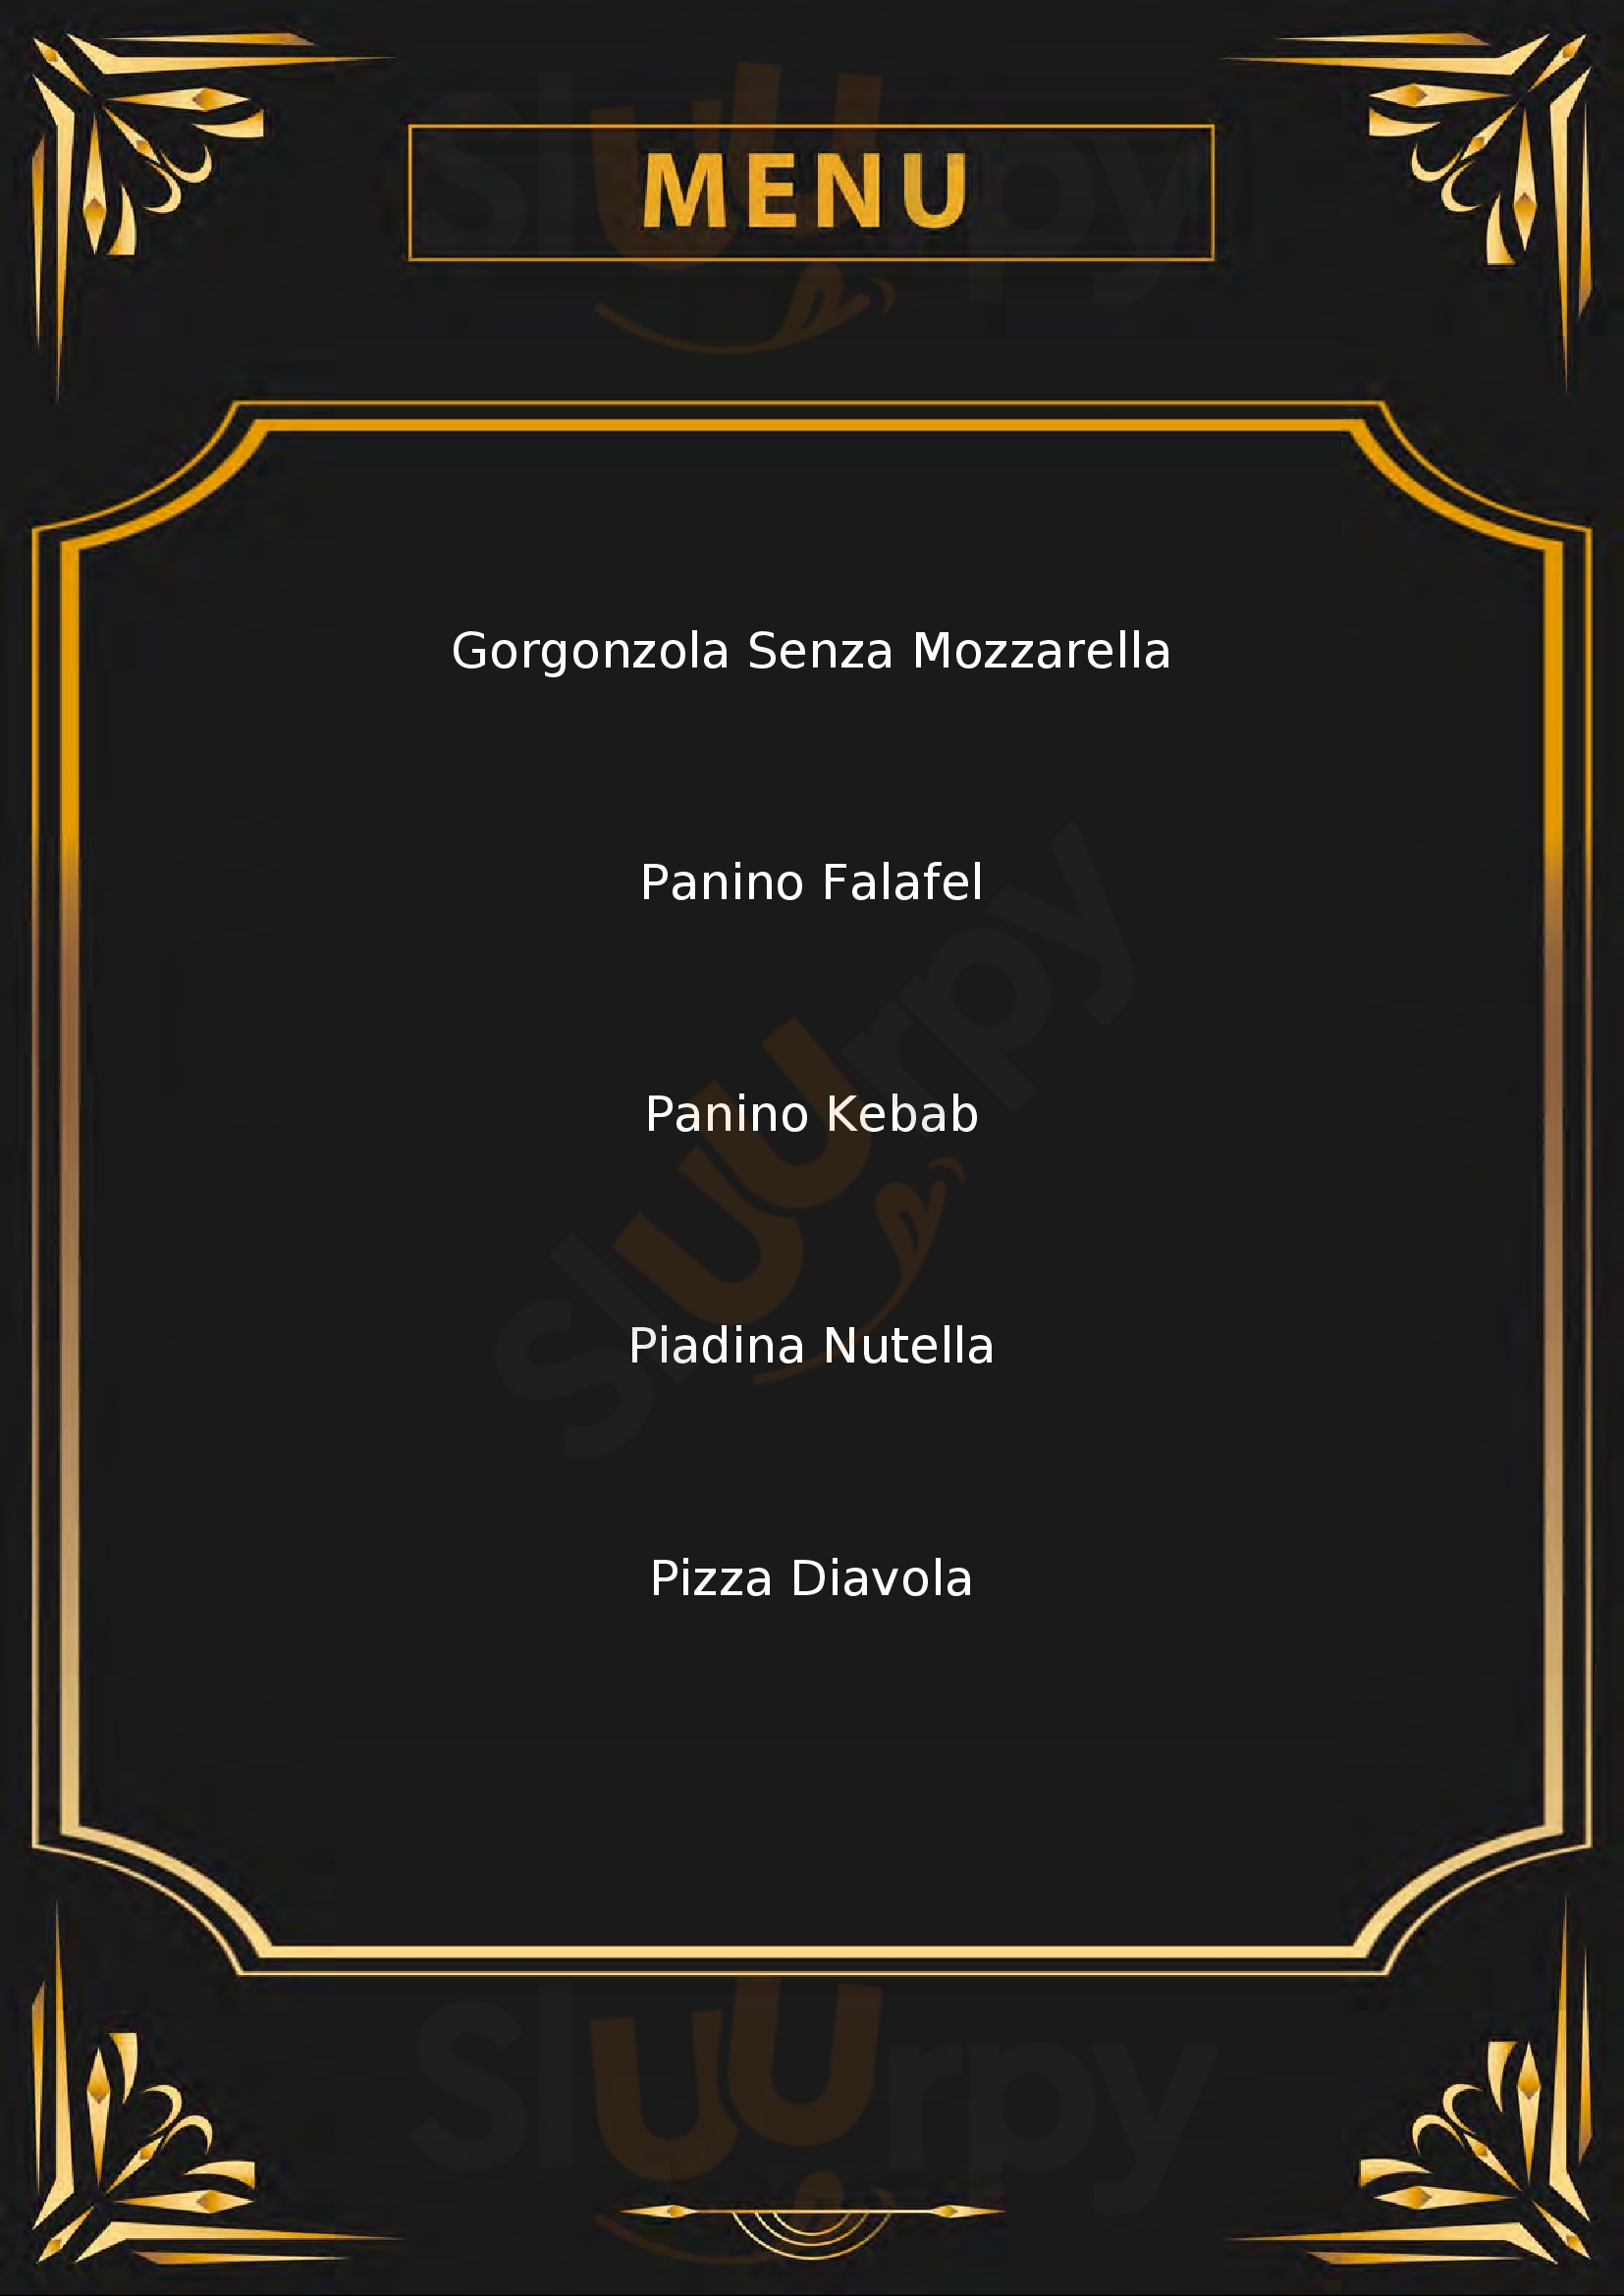 Mister Pizza Milano menù 1 pagina